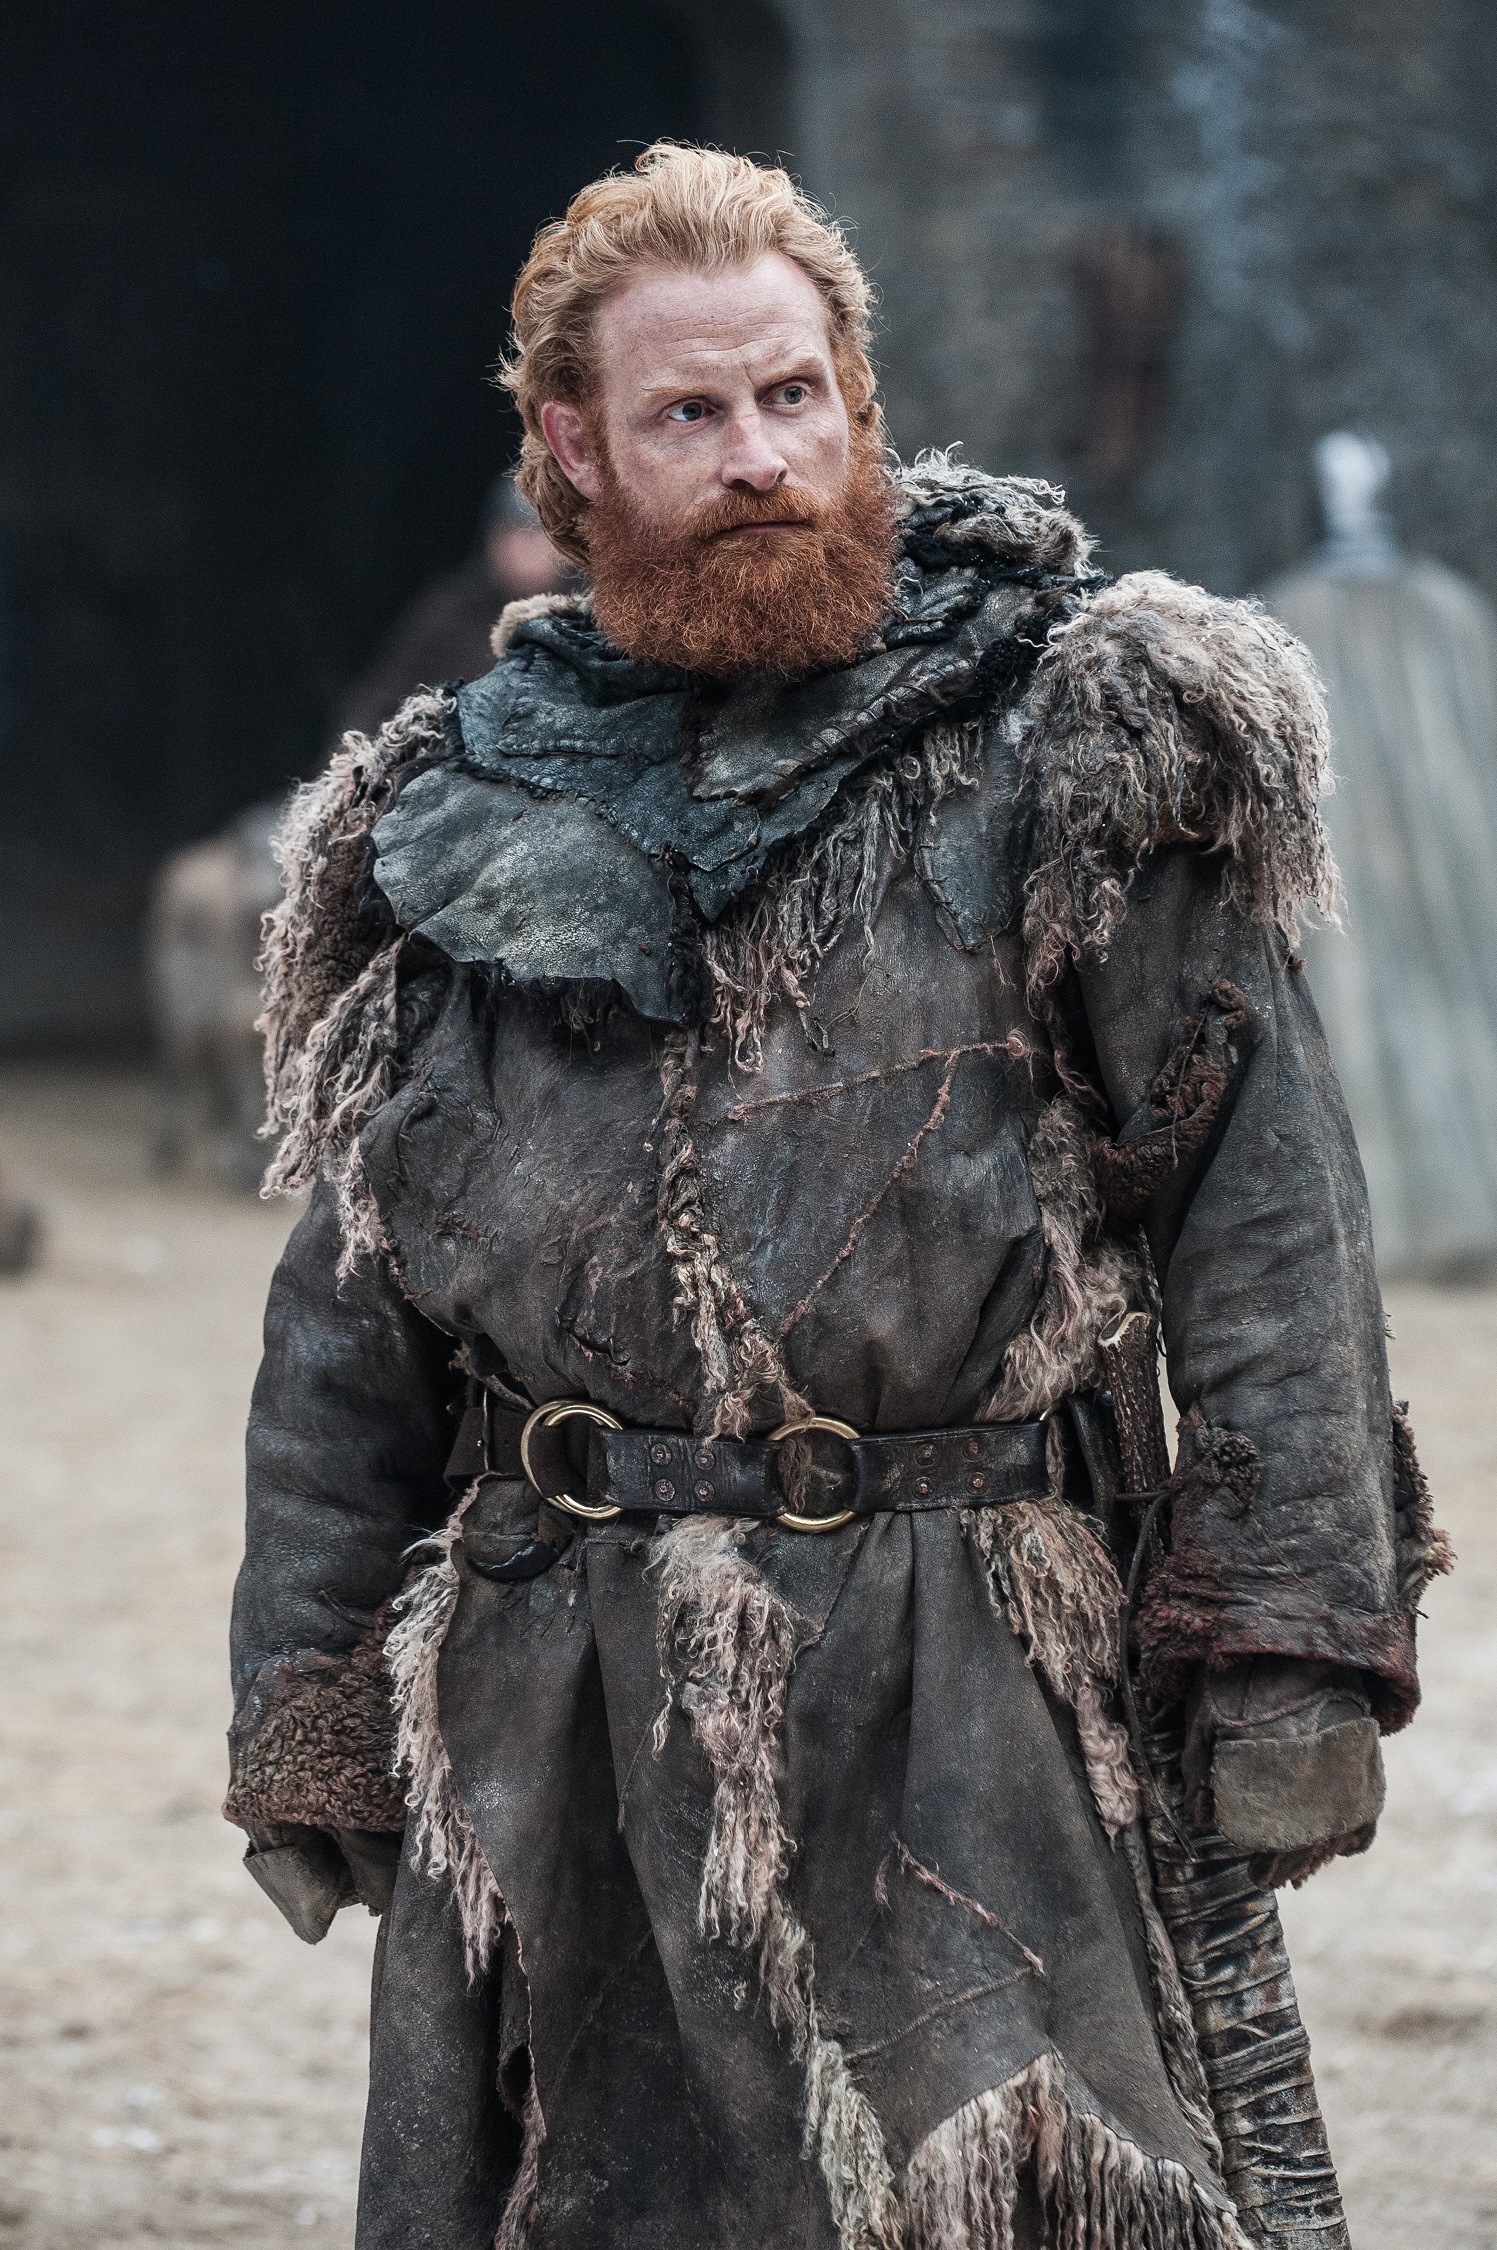 Kristofer Hivju as Tormund Giantsbane in Winterfell. Photo: HBO